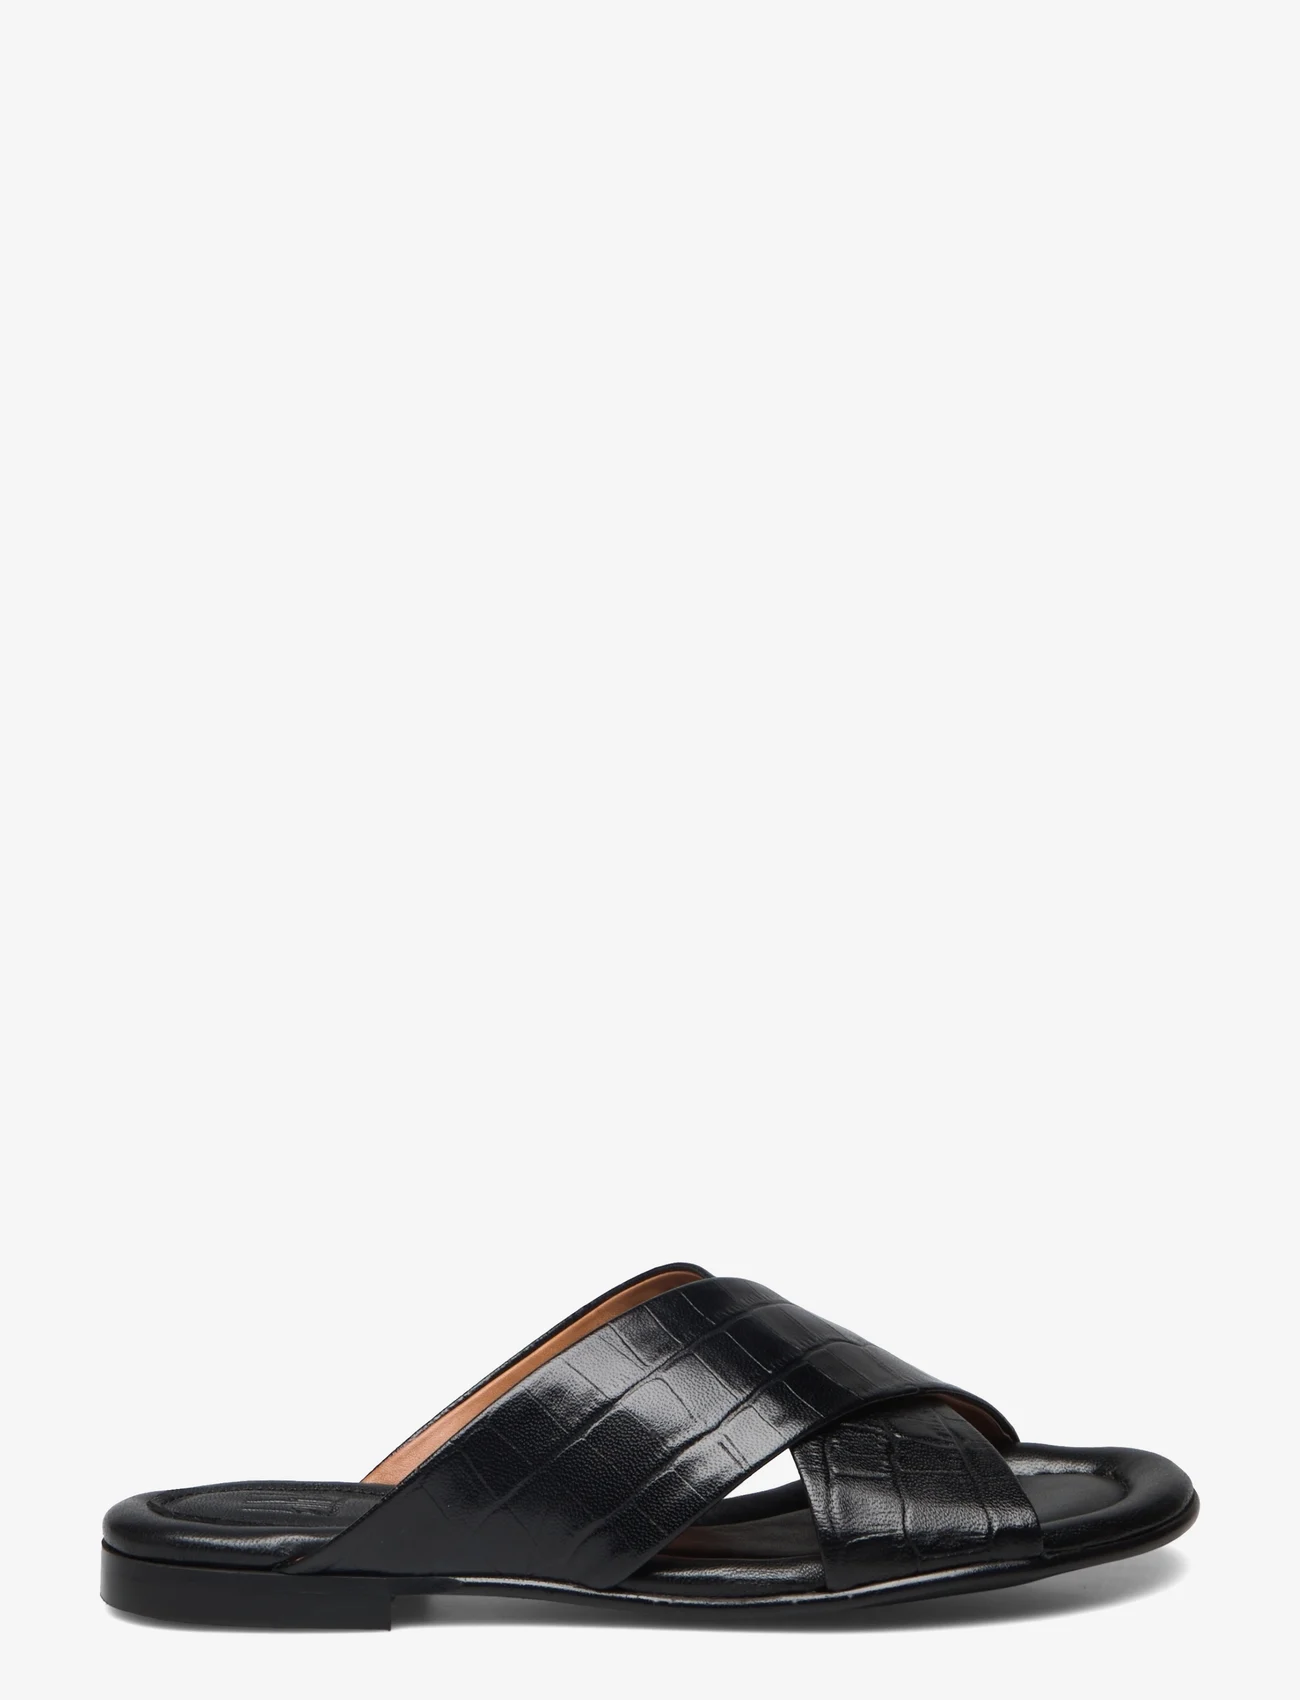 Billi Bi - Sandals - płaskie sandały - black croco 20 - 1